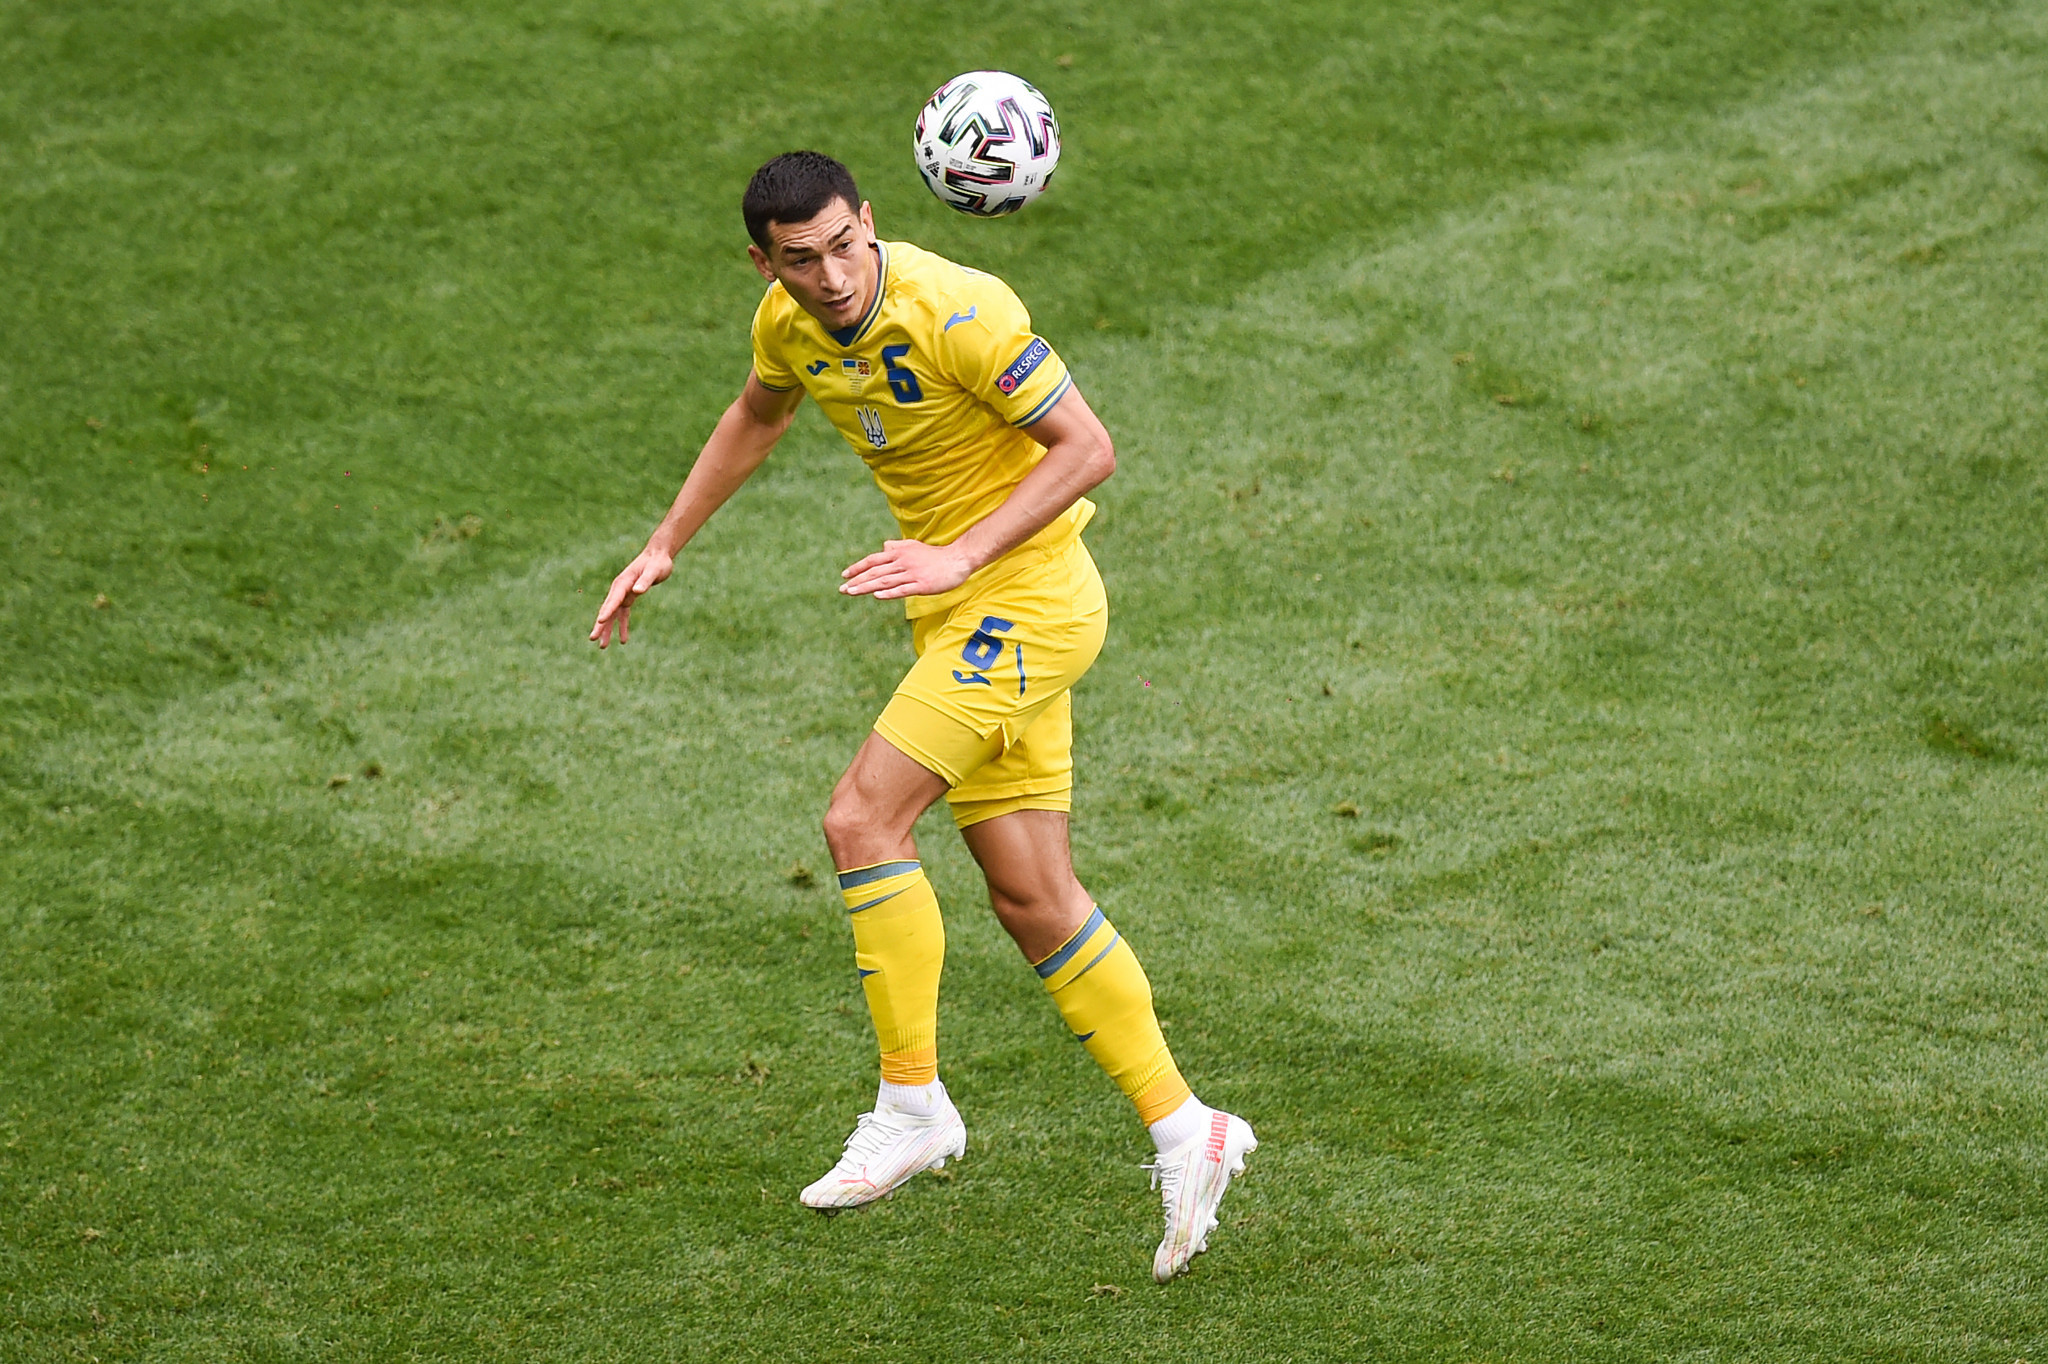 Ukraine midfielder Stepanenko asks for World Cup playoff to be delayed again